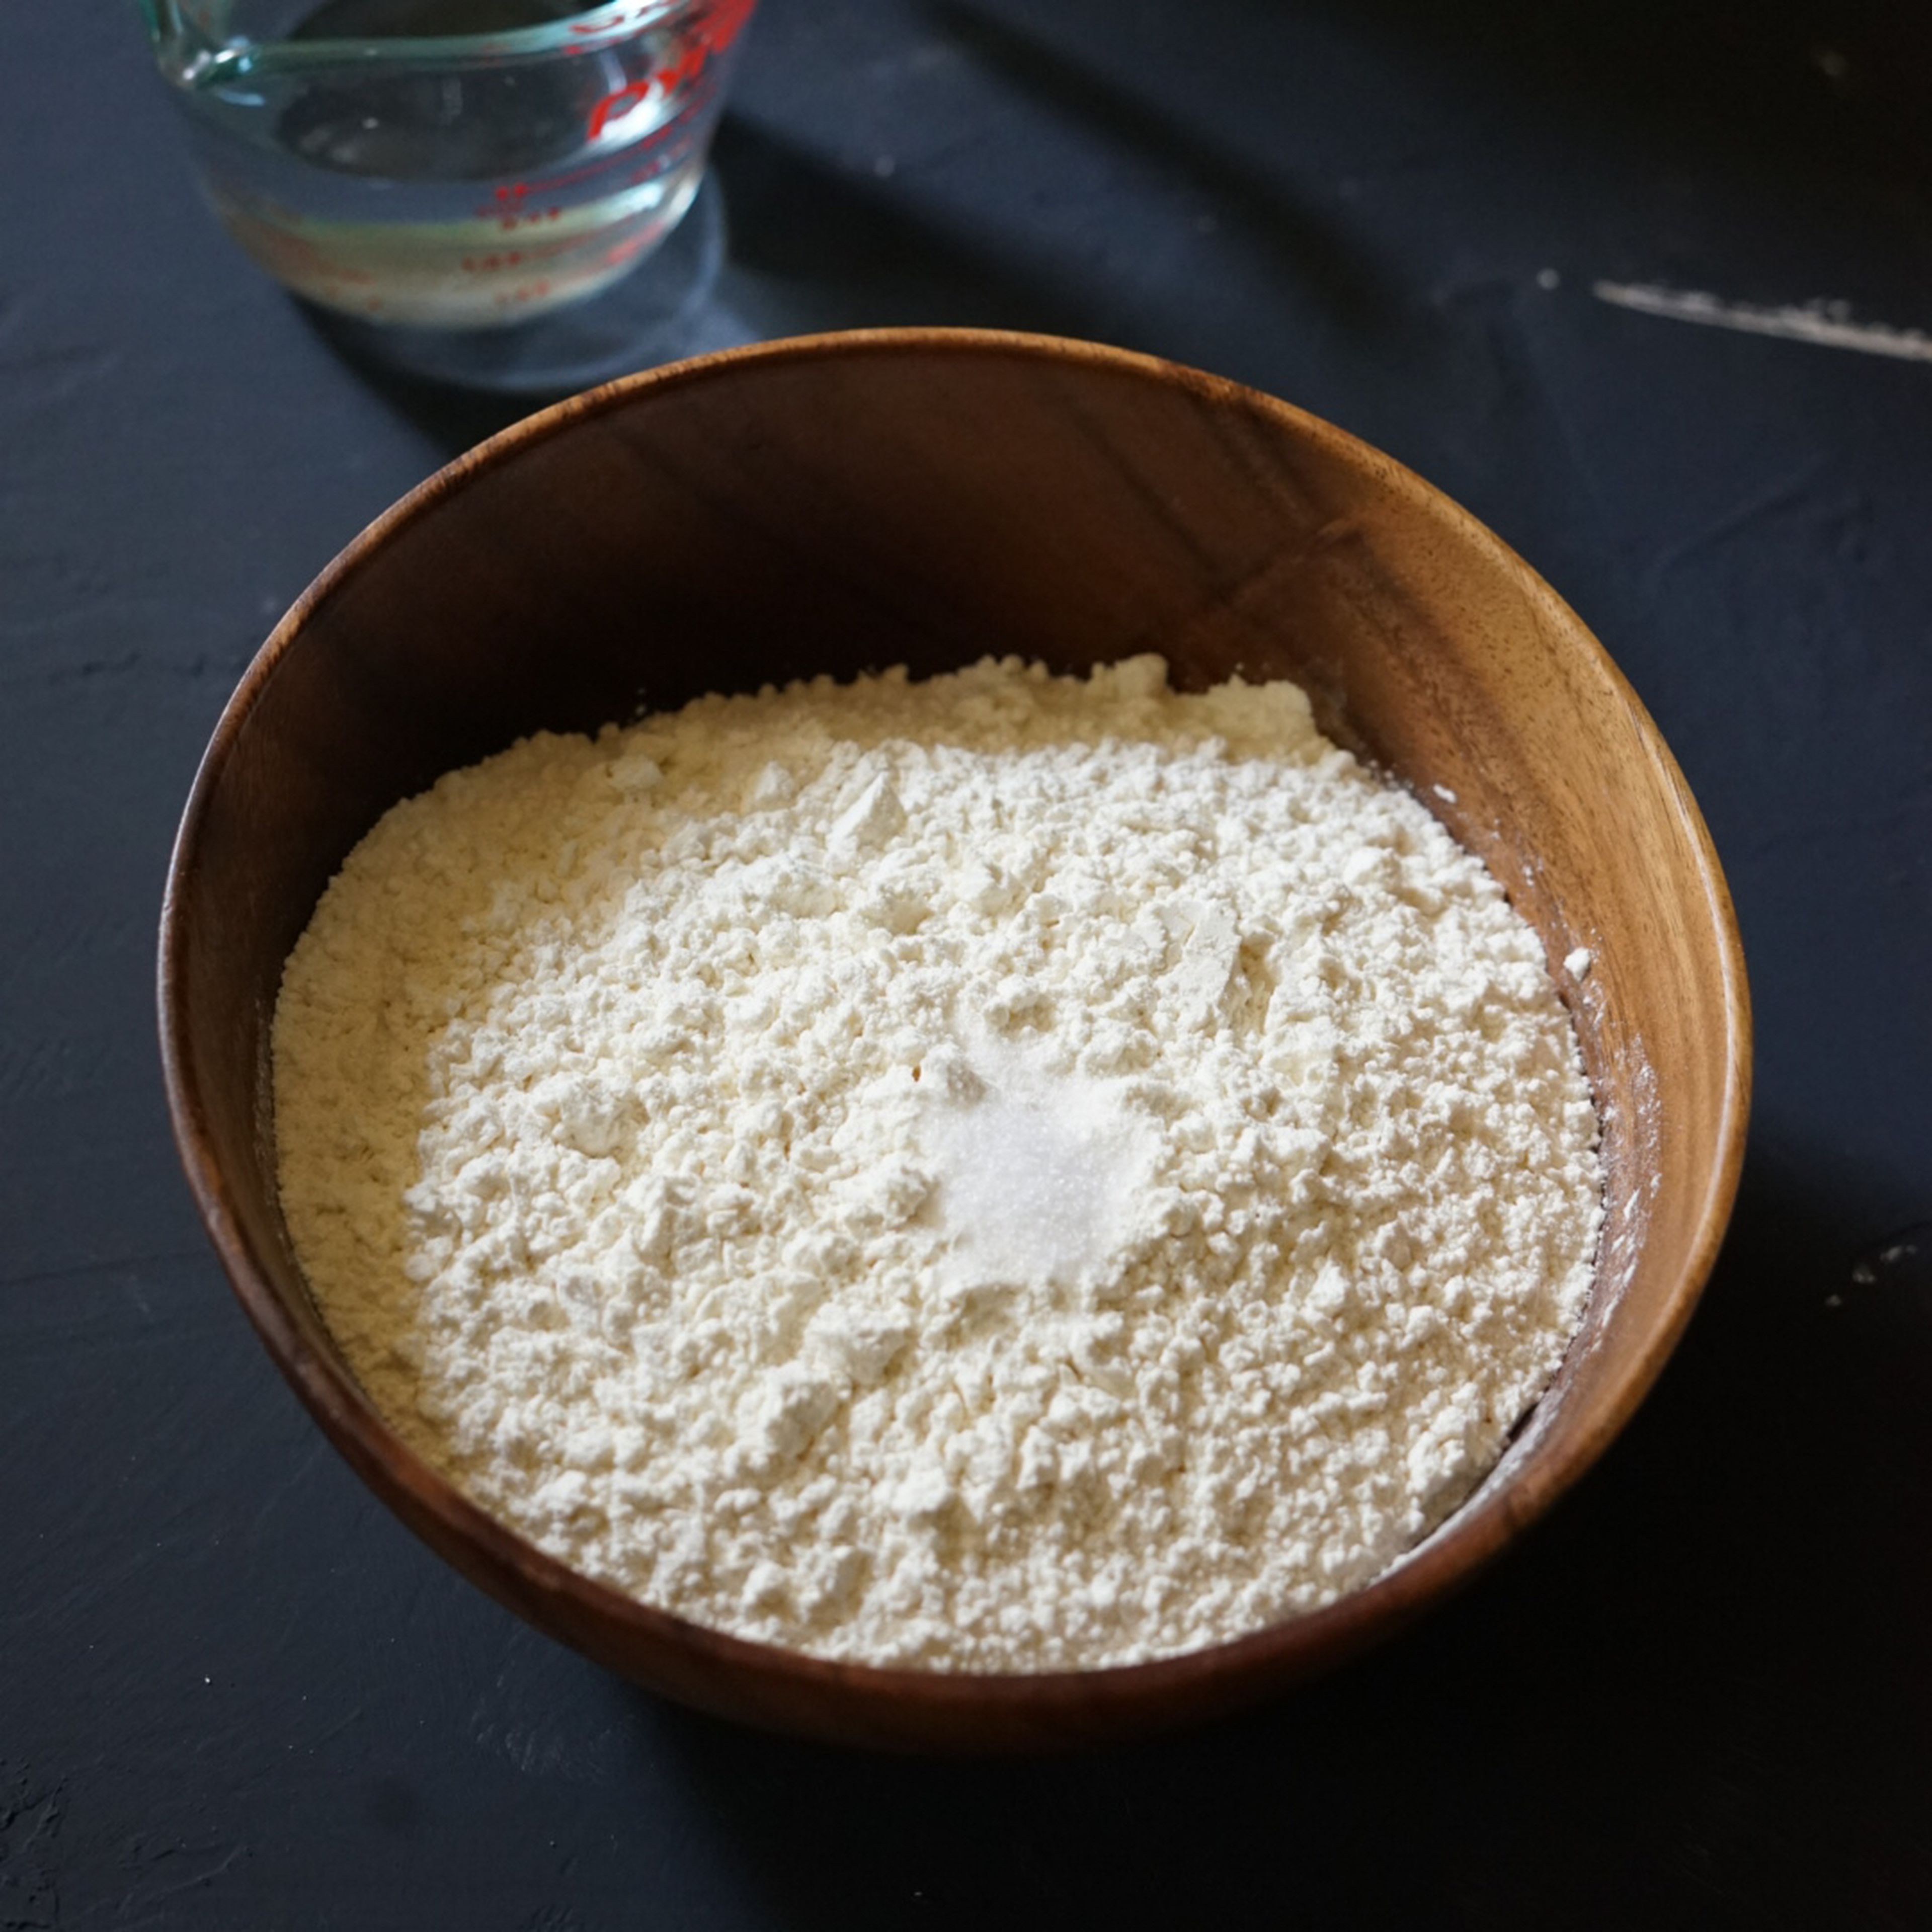 Combine flour and 1/4 tsp of salt.